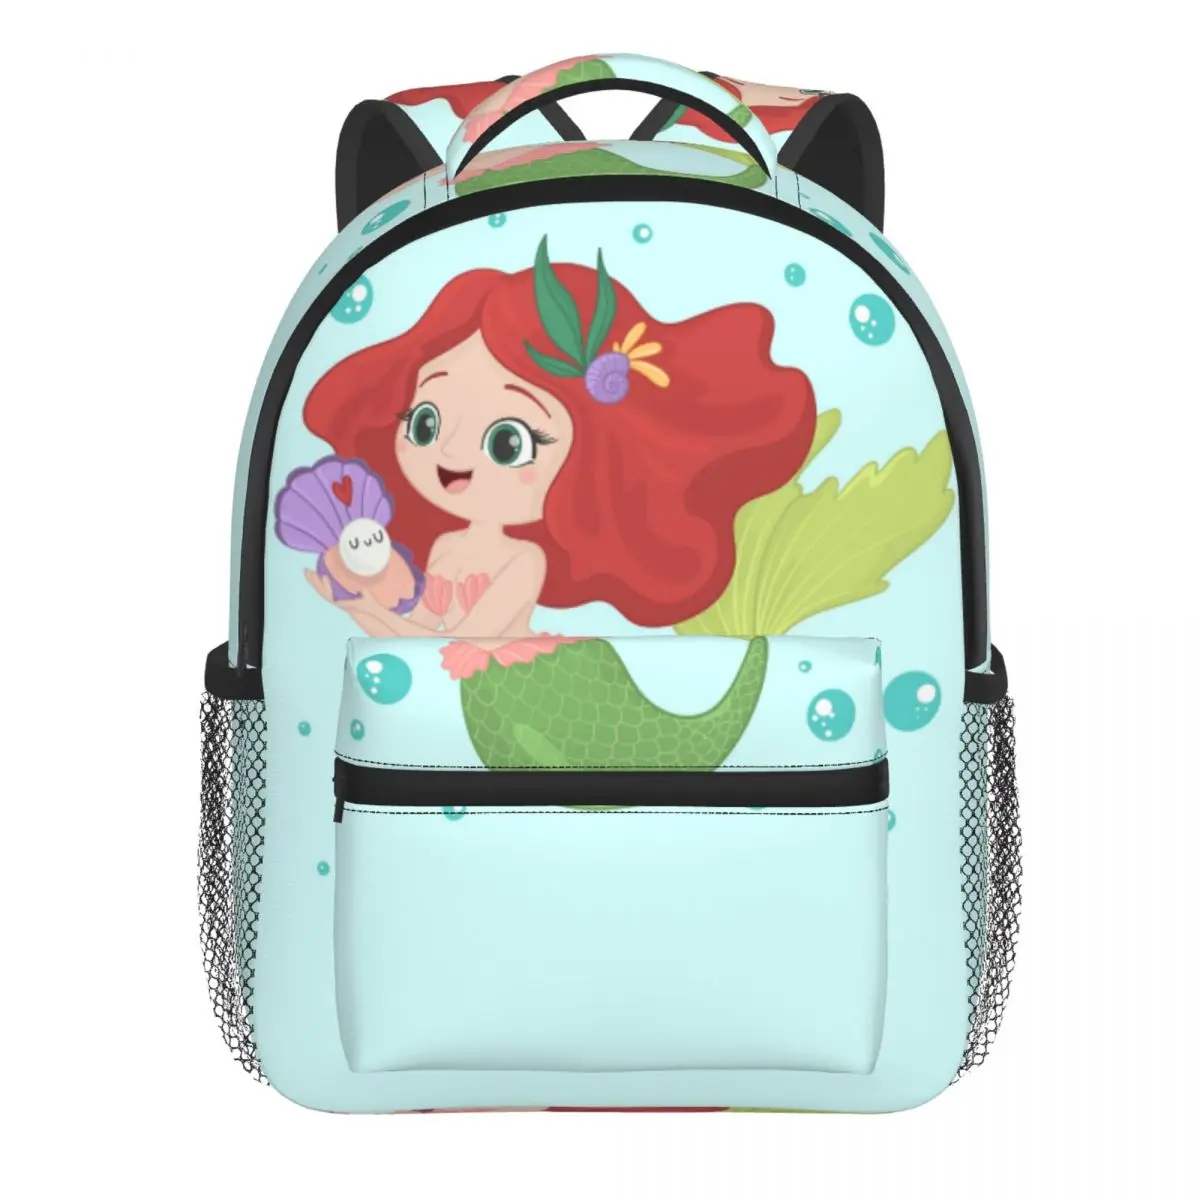 Cute Smiling Mermaid Character Baby Backpack Kindergarten Schoolbag Kids Children School Bag